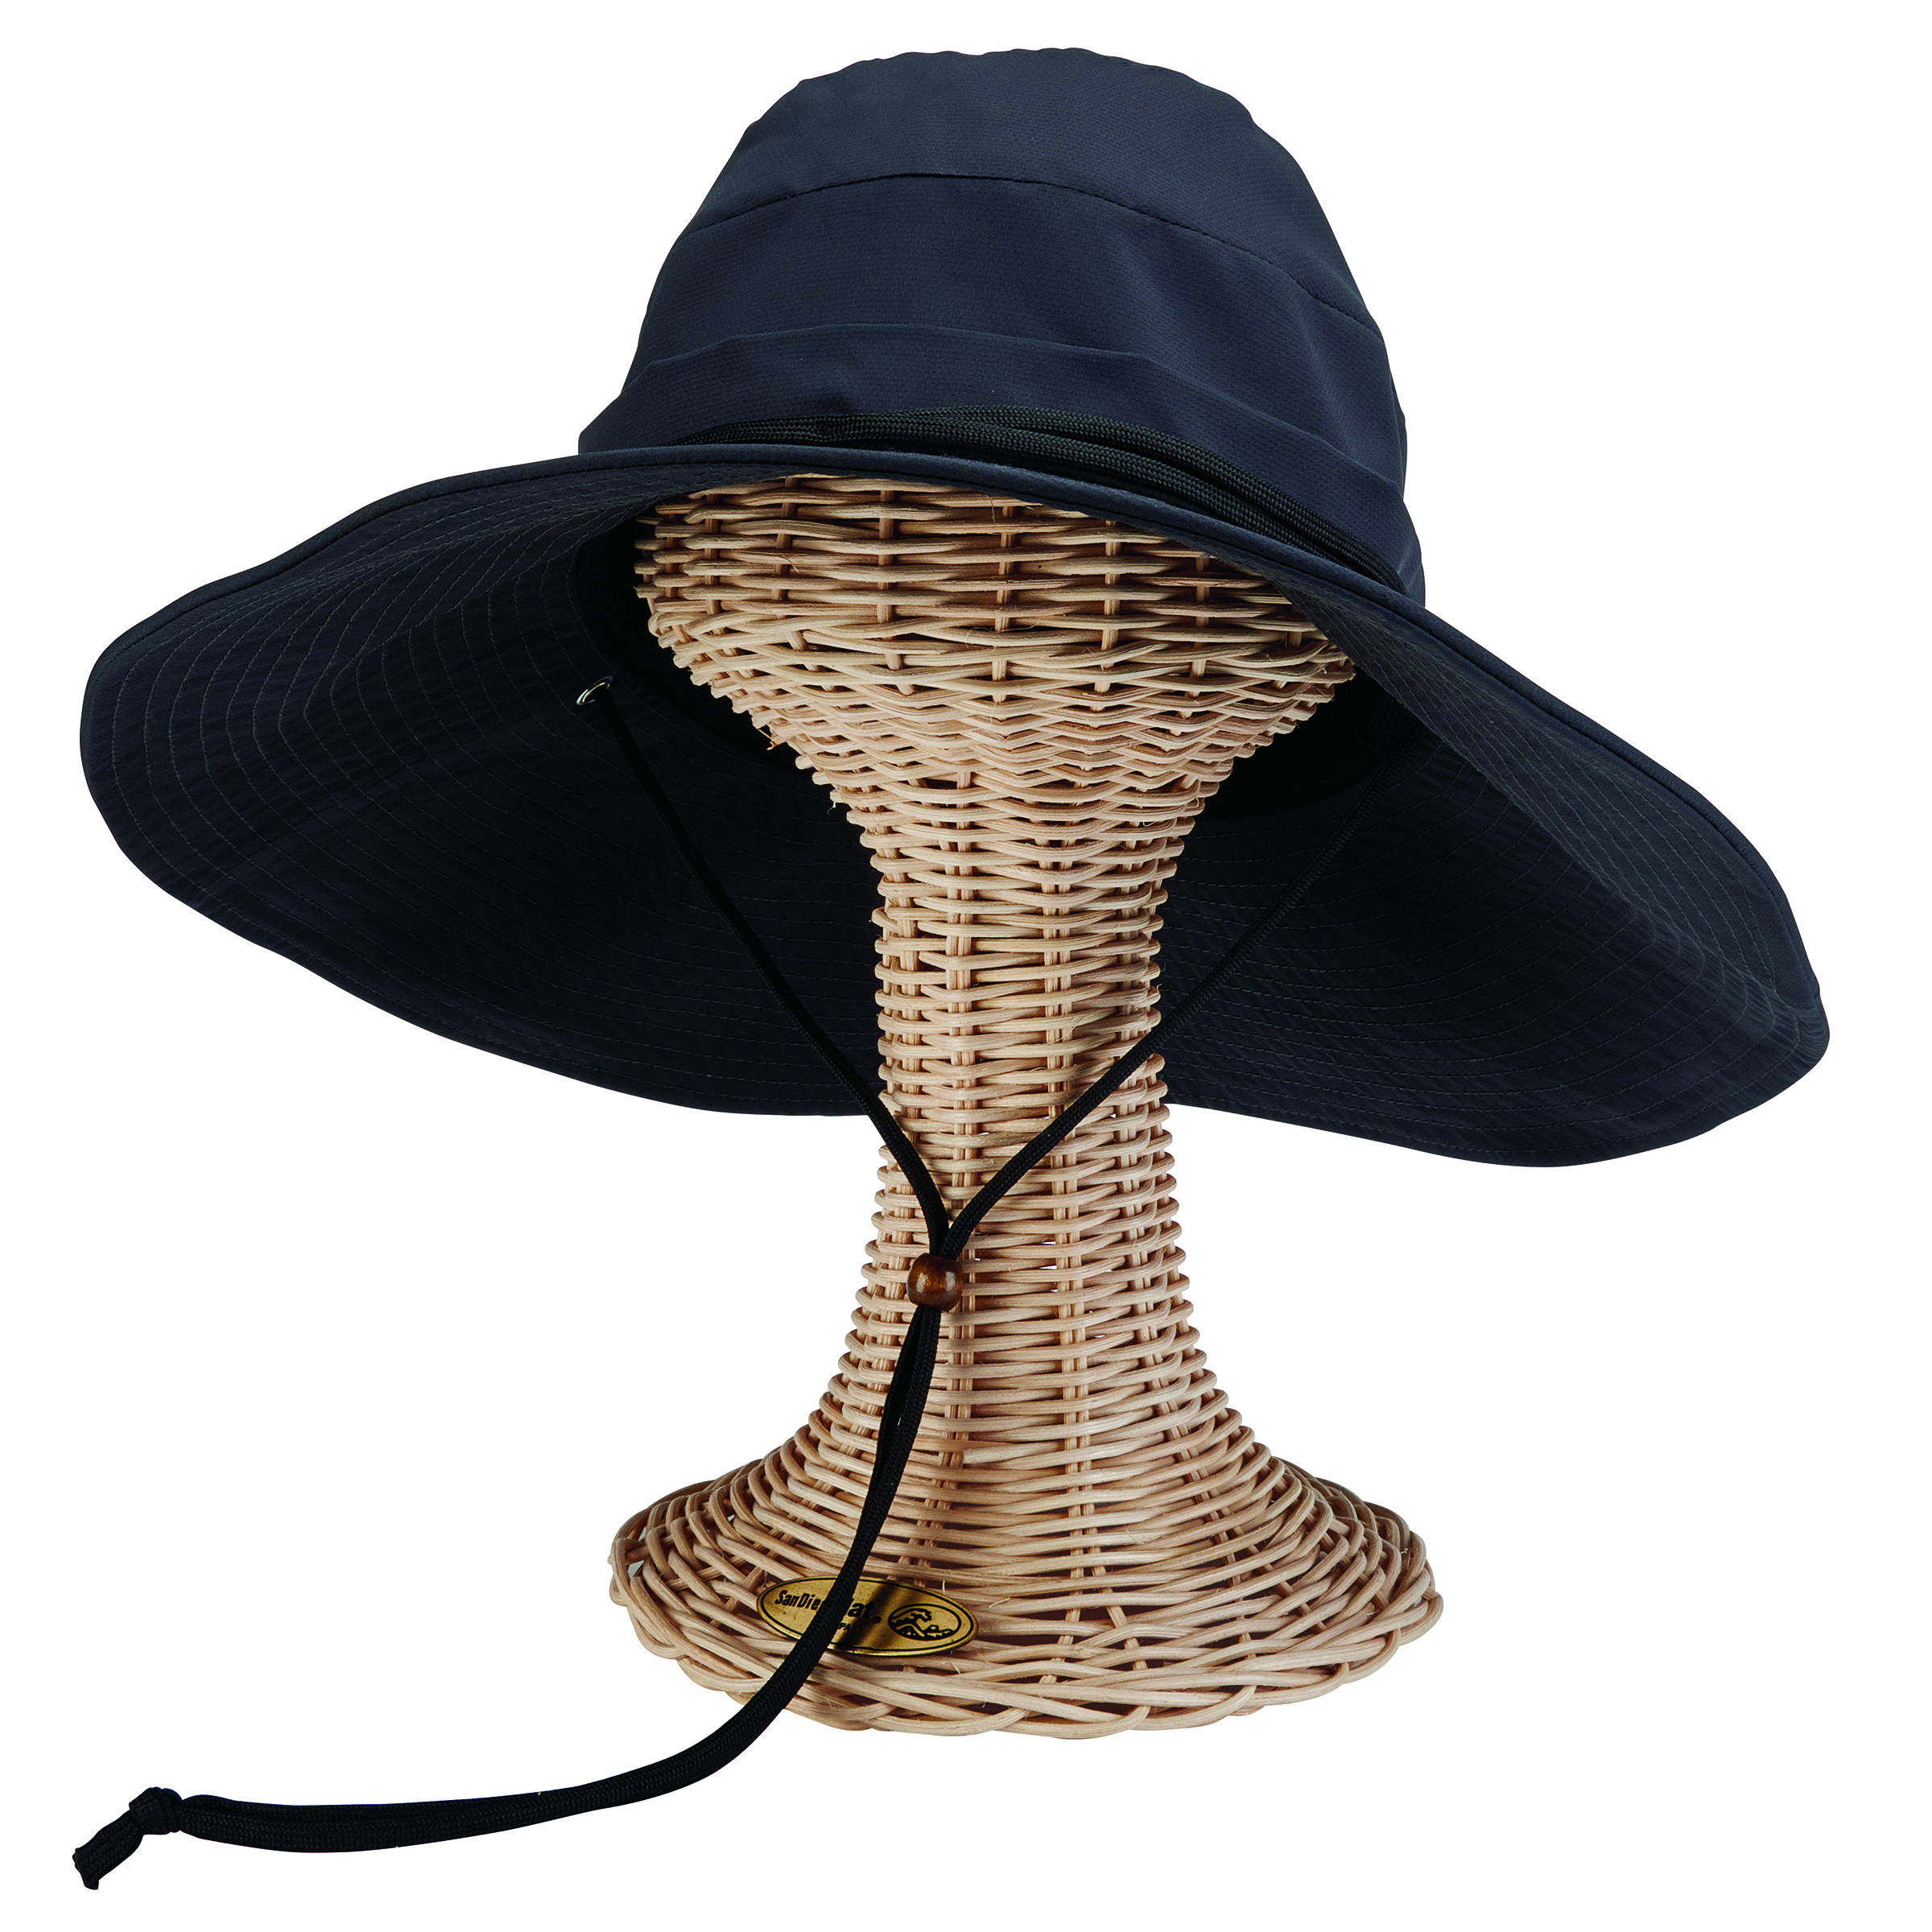 Best sun hats for gardening - Gardens Illustrated